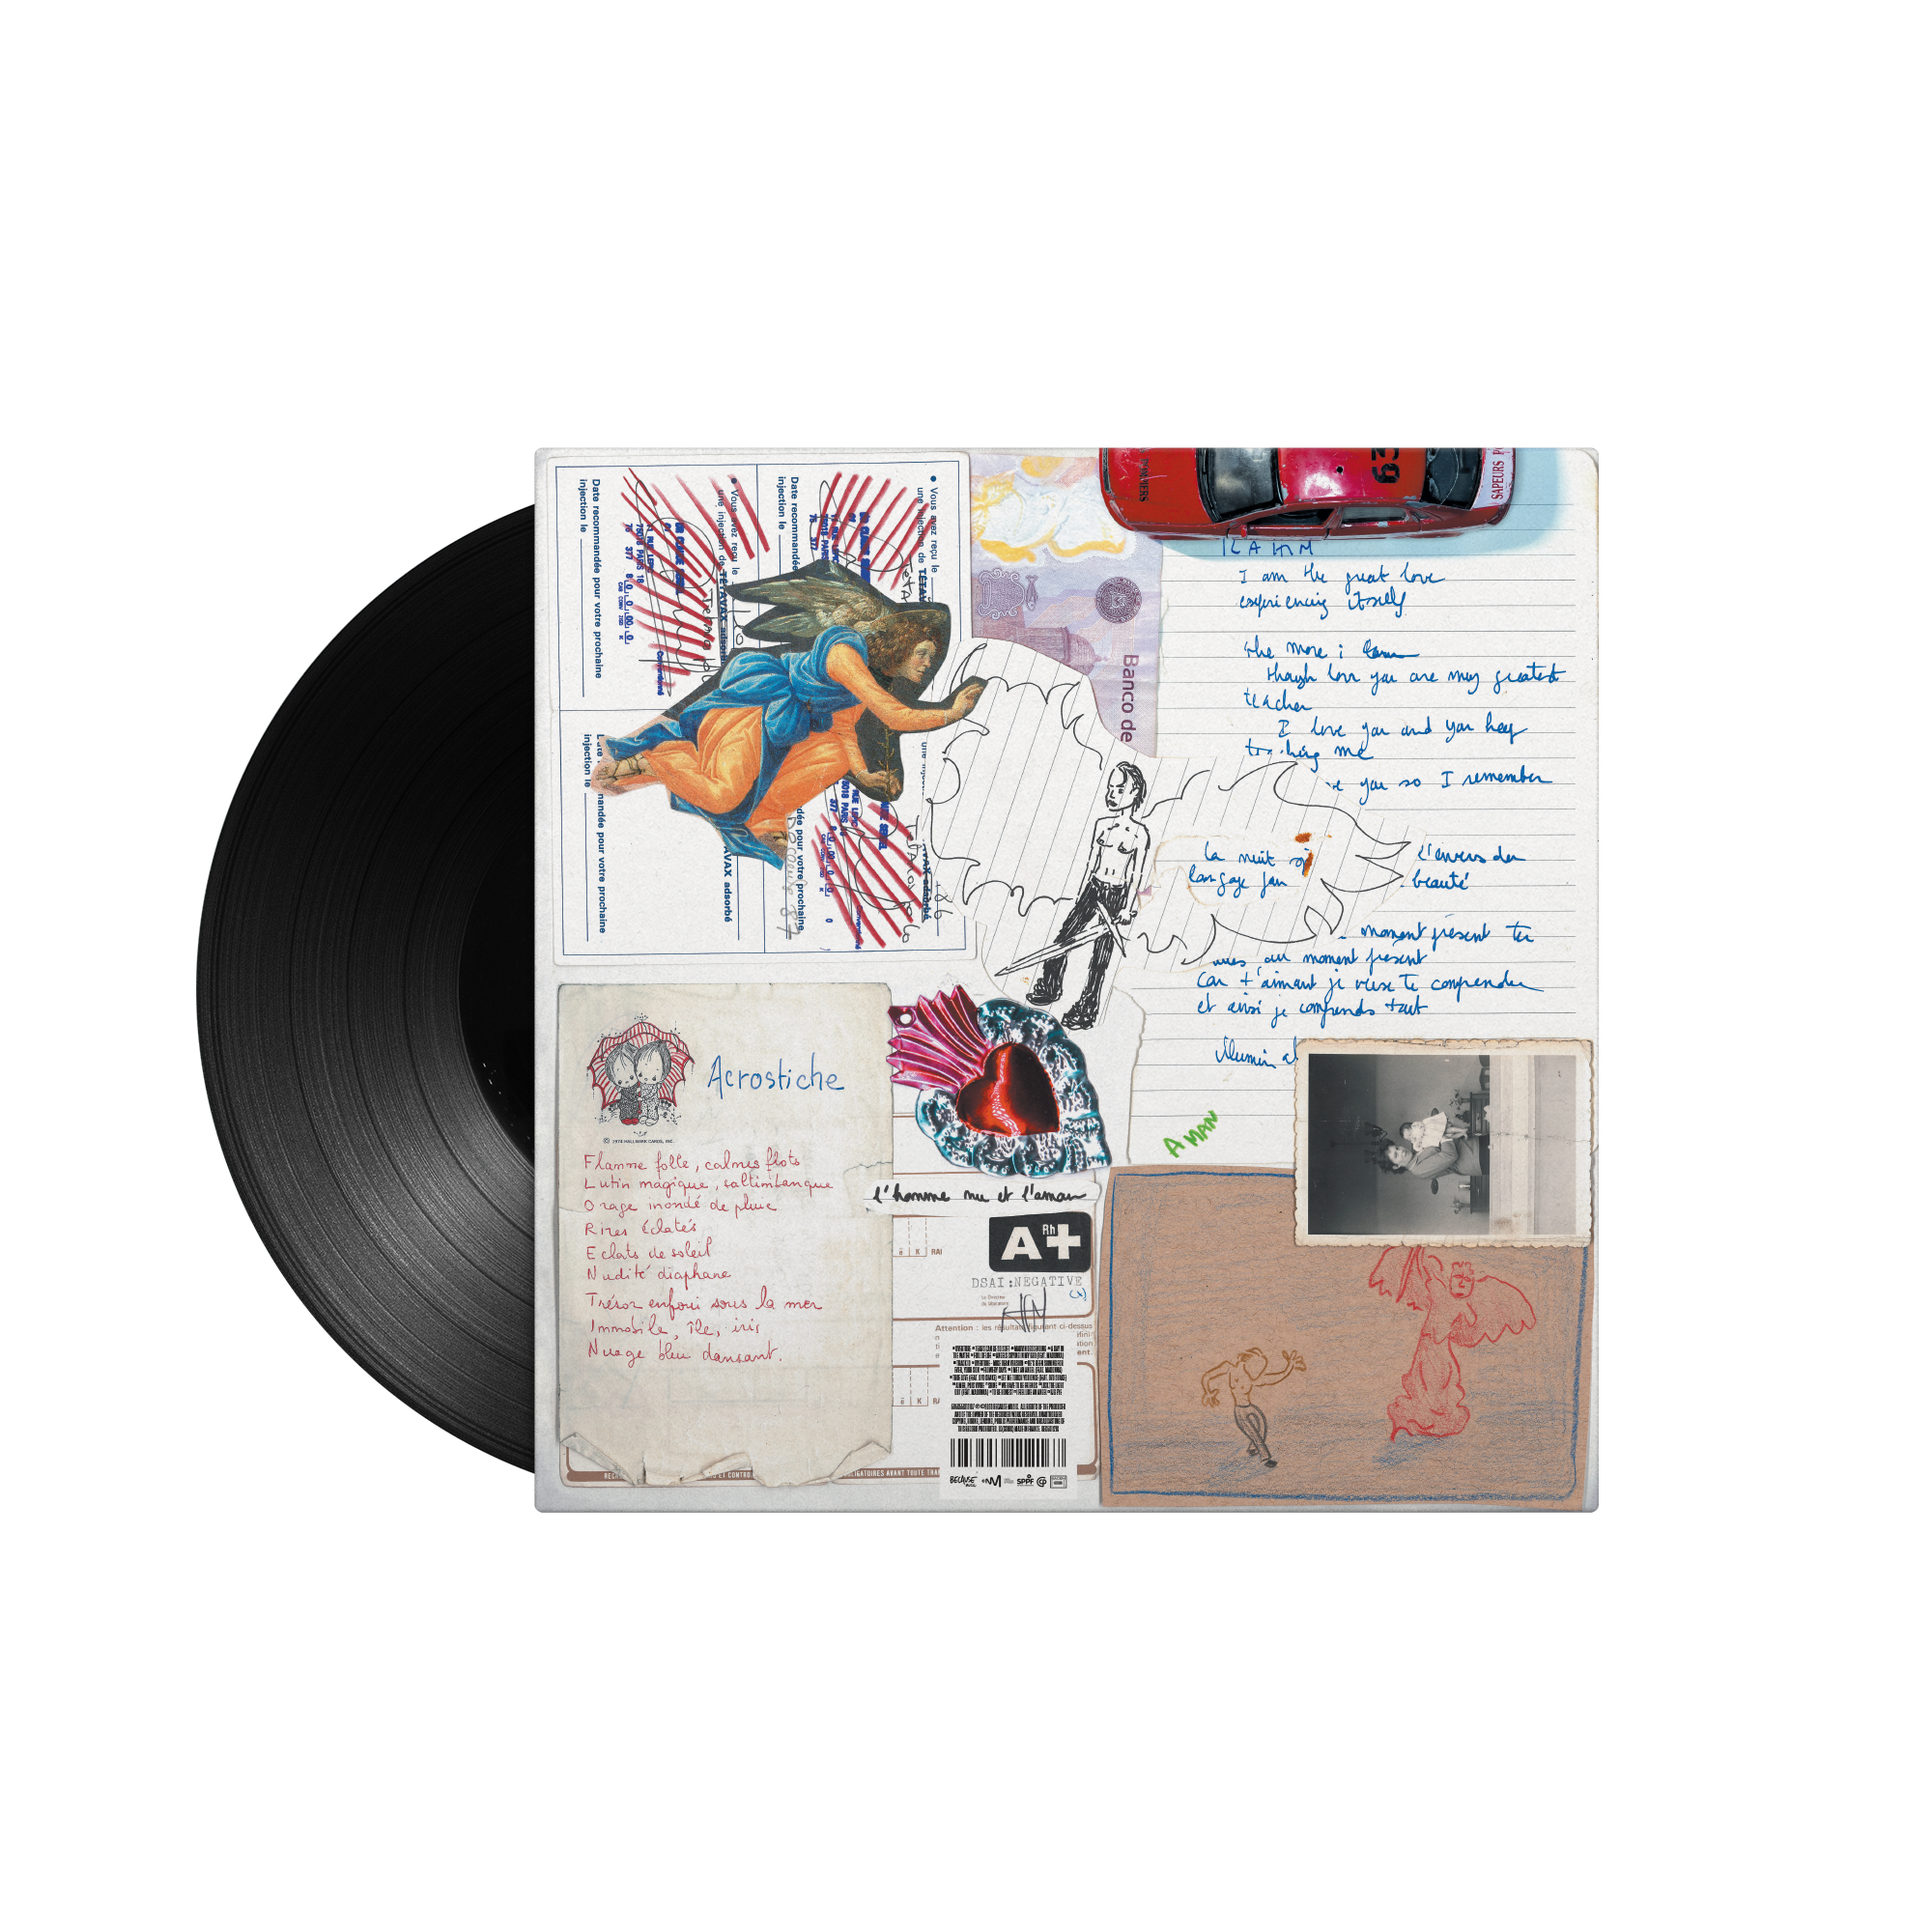 Christine and the Queens - PARANOÏA, ANGELS, TRUE LOVE: 180gm Vinyl LP